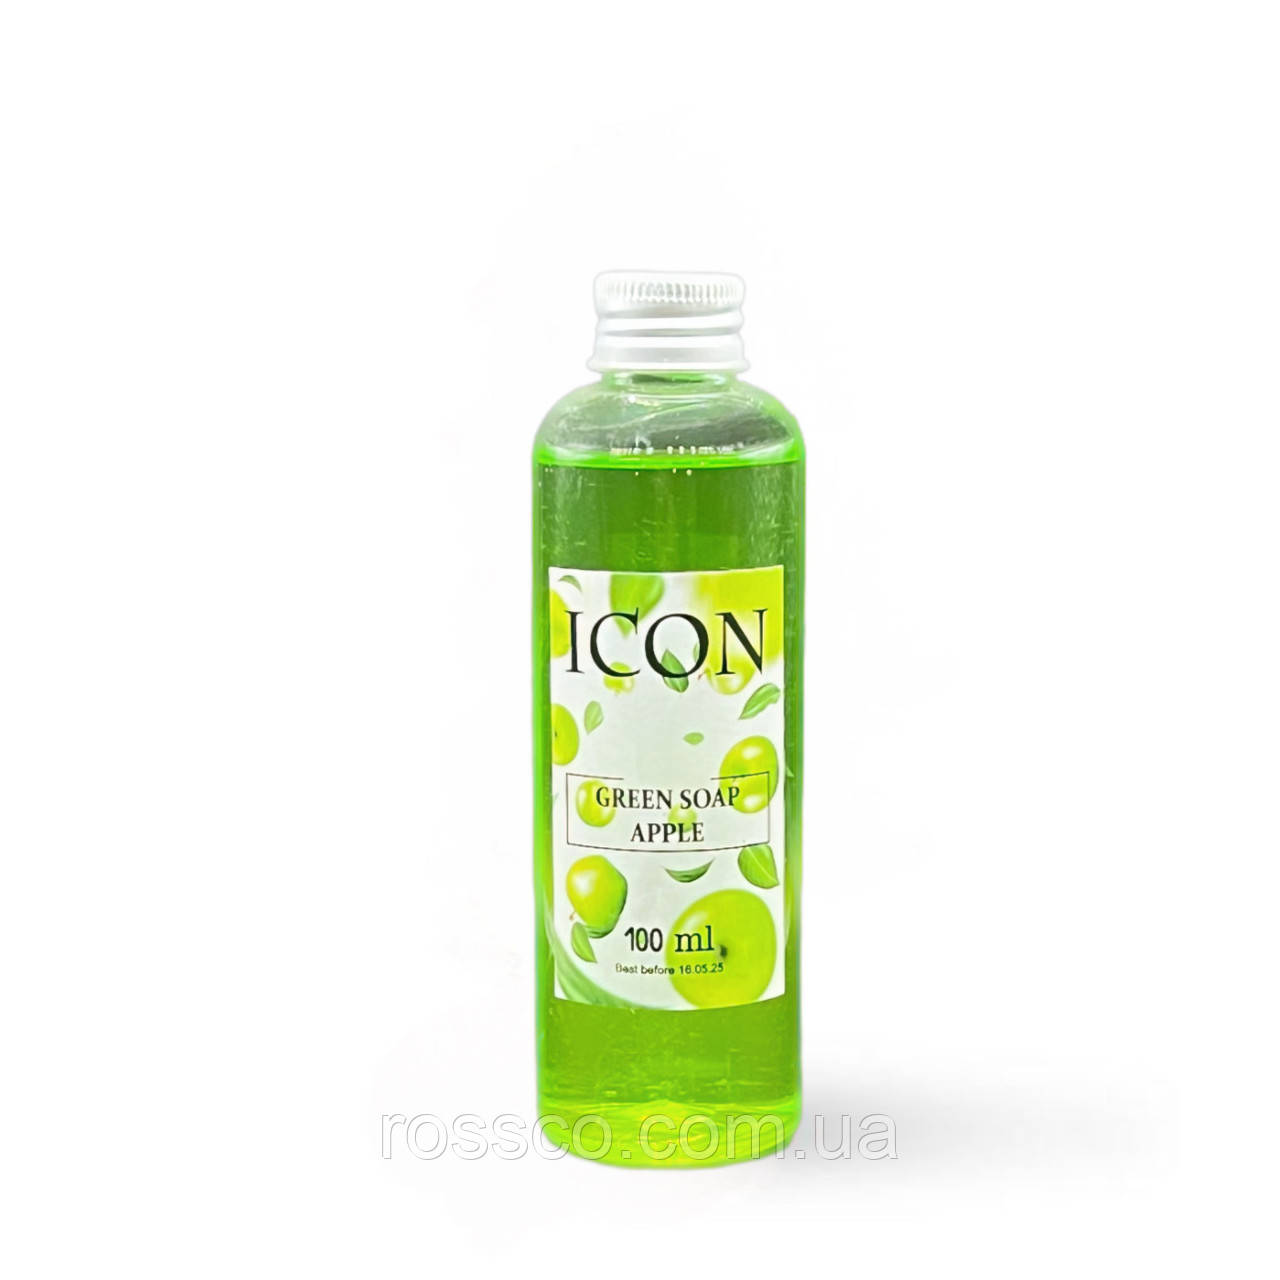 Зелене мило ICON Green Soap "Apple" 100 мл